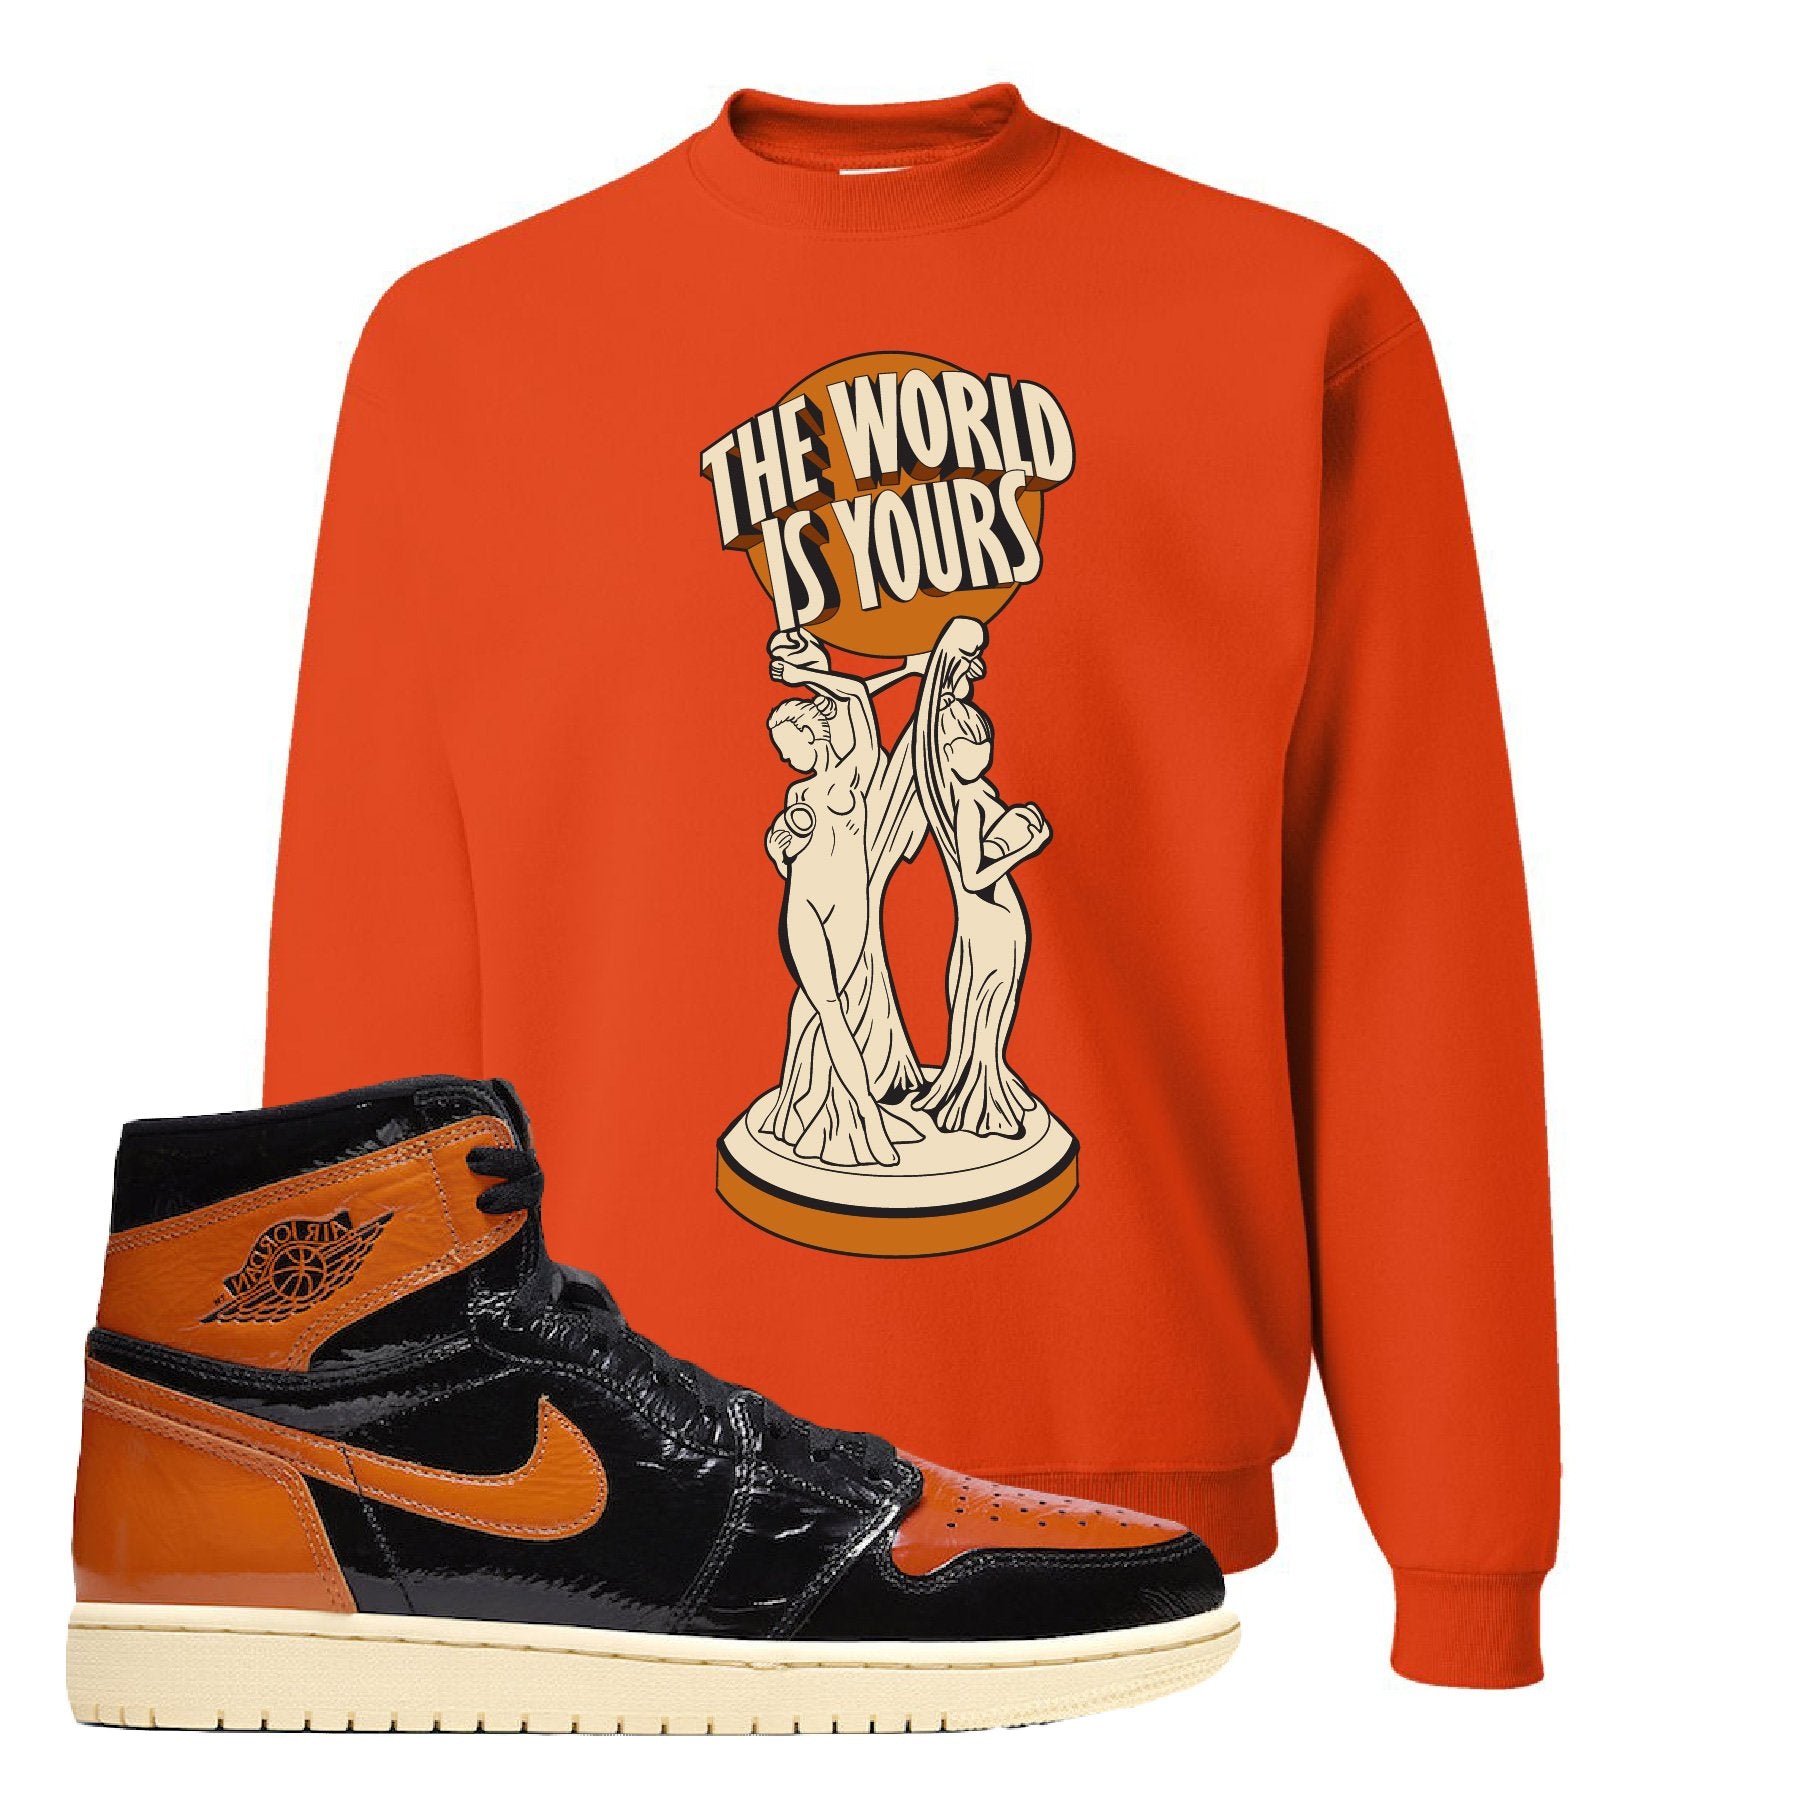 Jordan 1 Shattered Backboard The World Is Yours Statue Burnt Orange Sneaker Hook Up Crewneck Sweatshirt